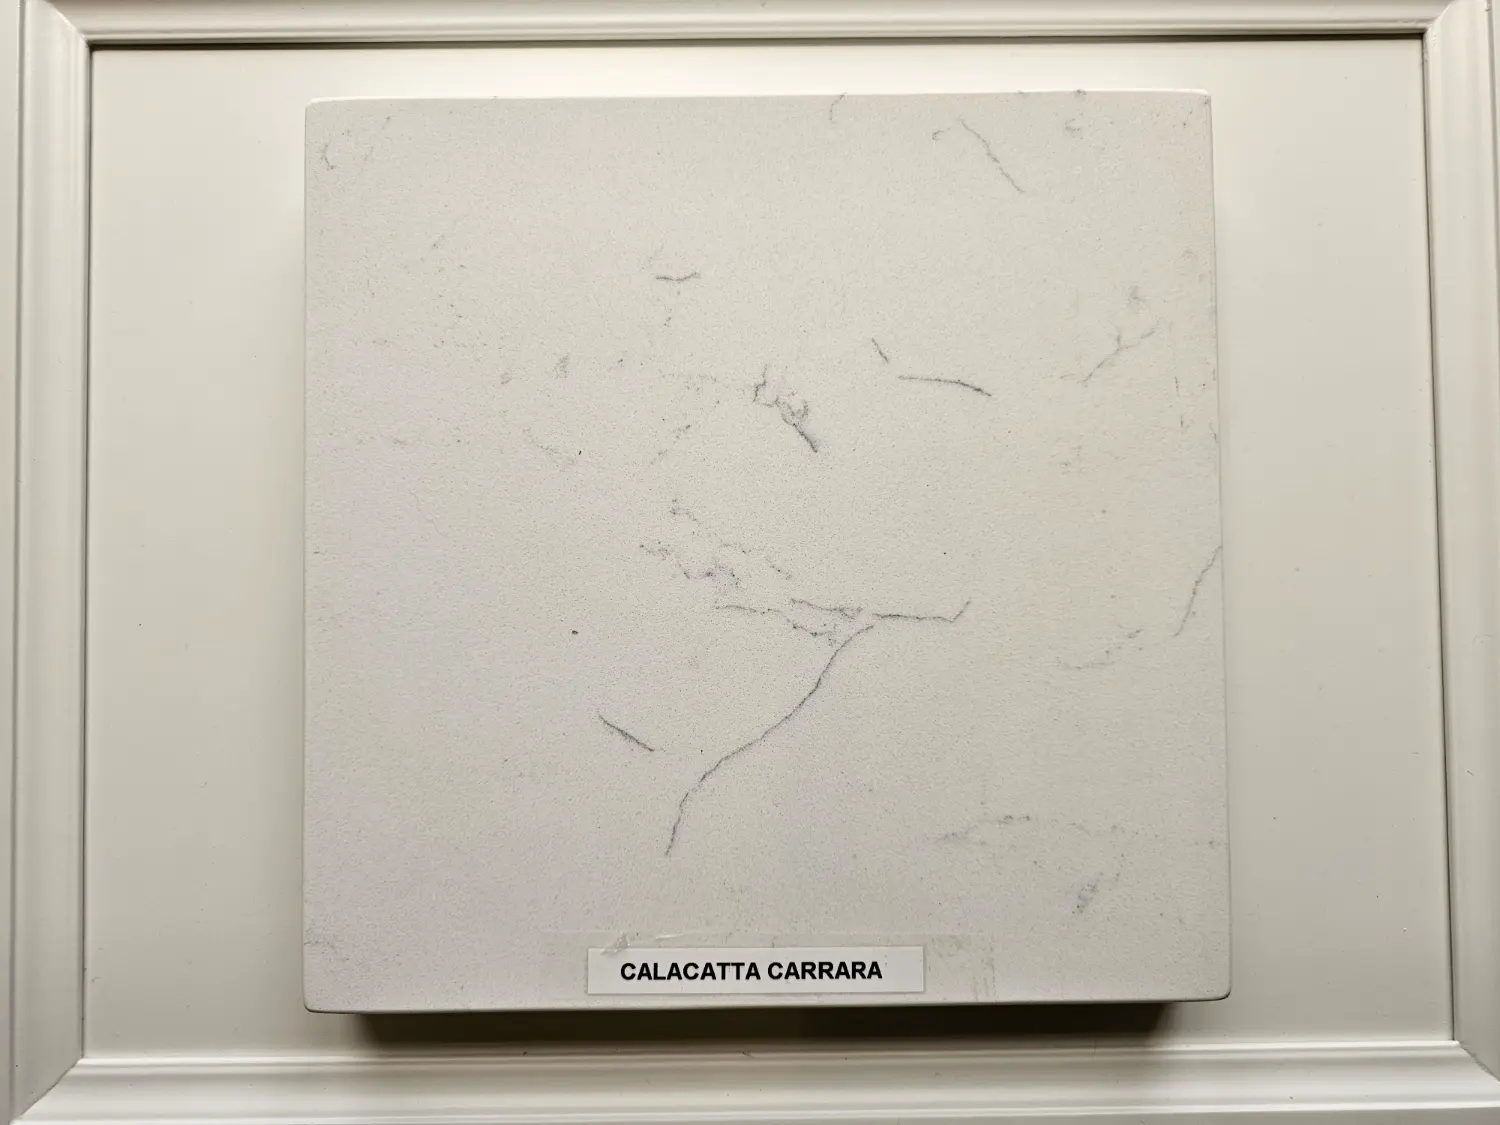 Calacatta Carrara quartz countertops